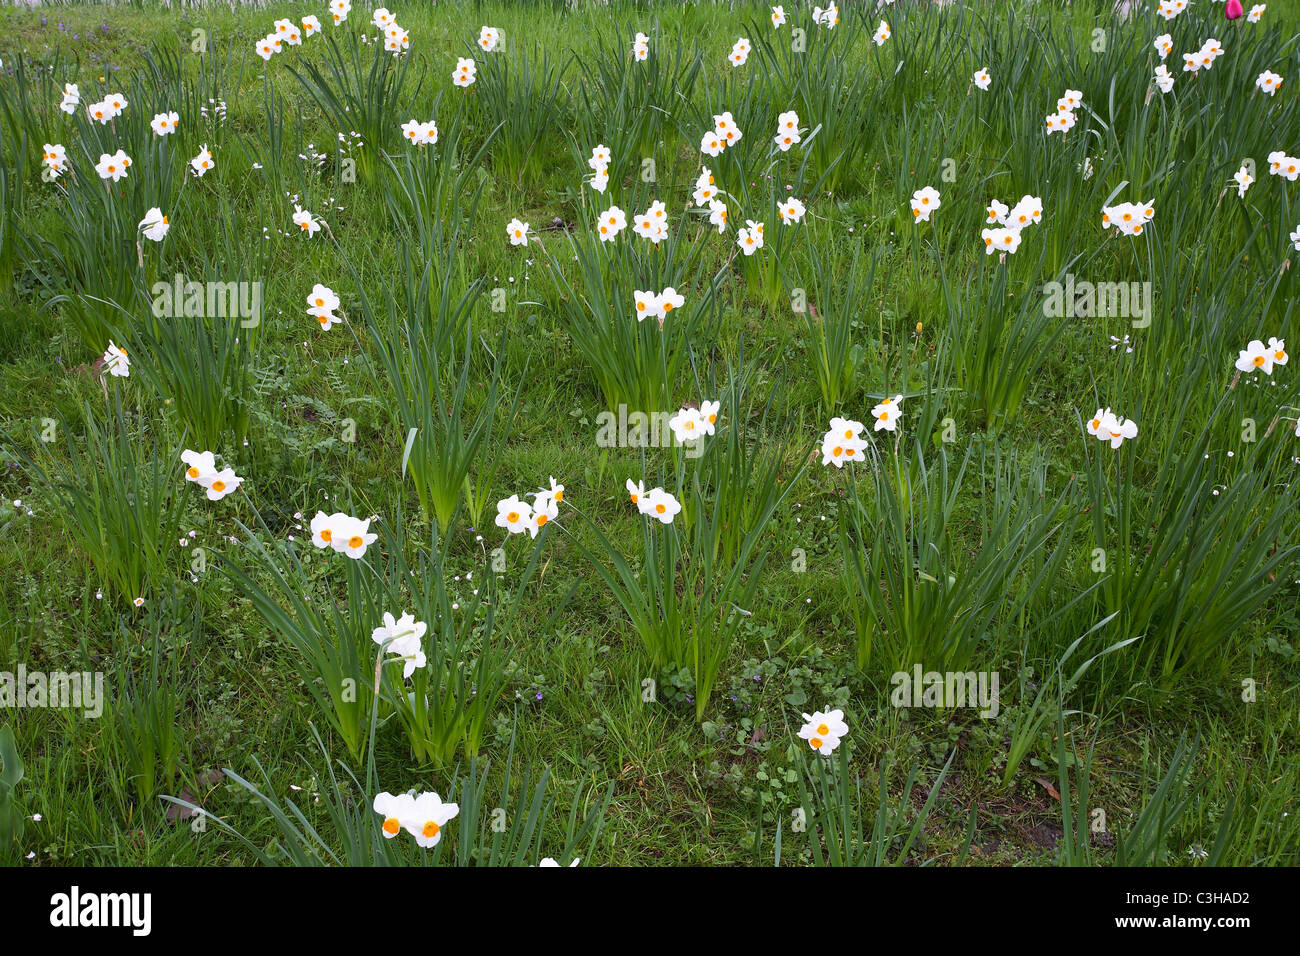 Narzissen, Bluete, Weiss, narcisses, jonquilles, white blossom, Insel Maniau, Deutschland, Allemagne Banque D'Images